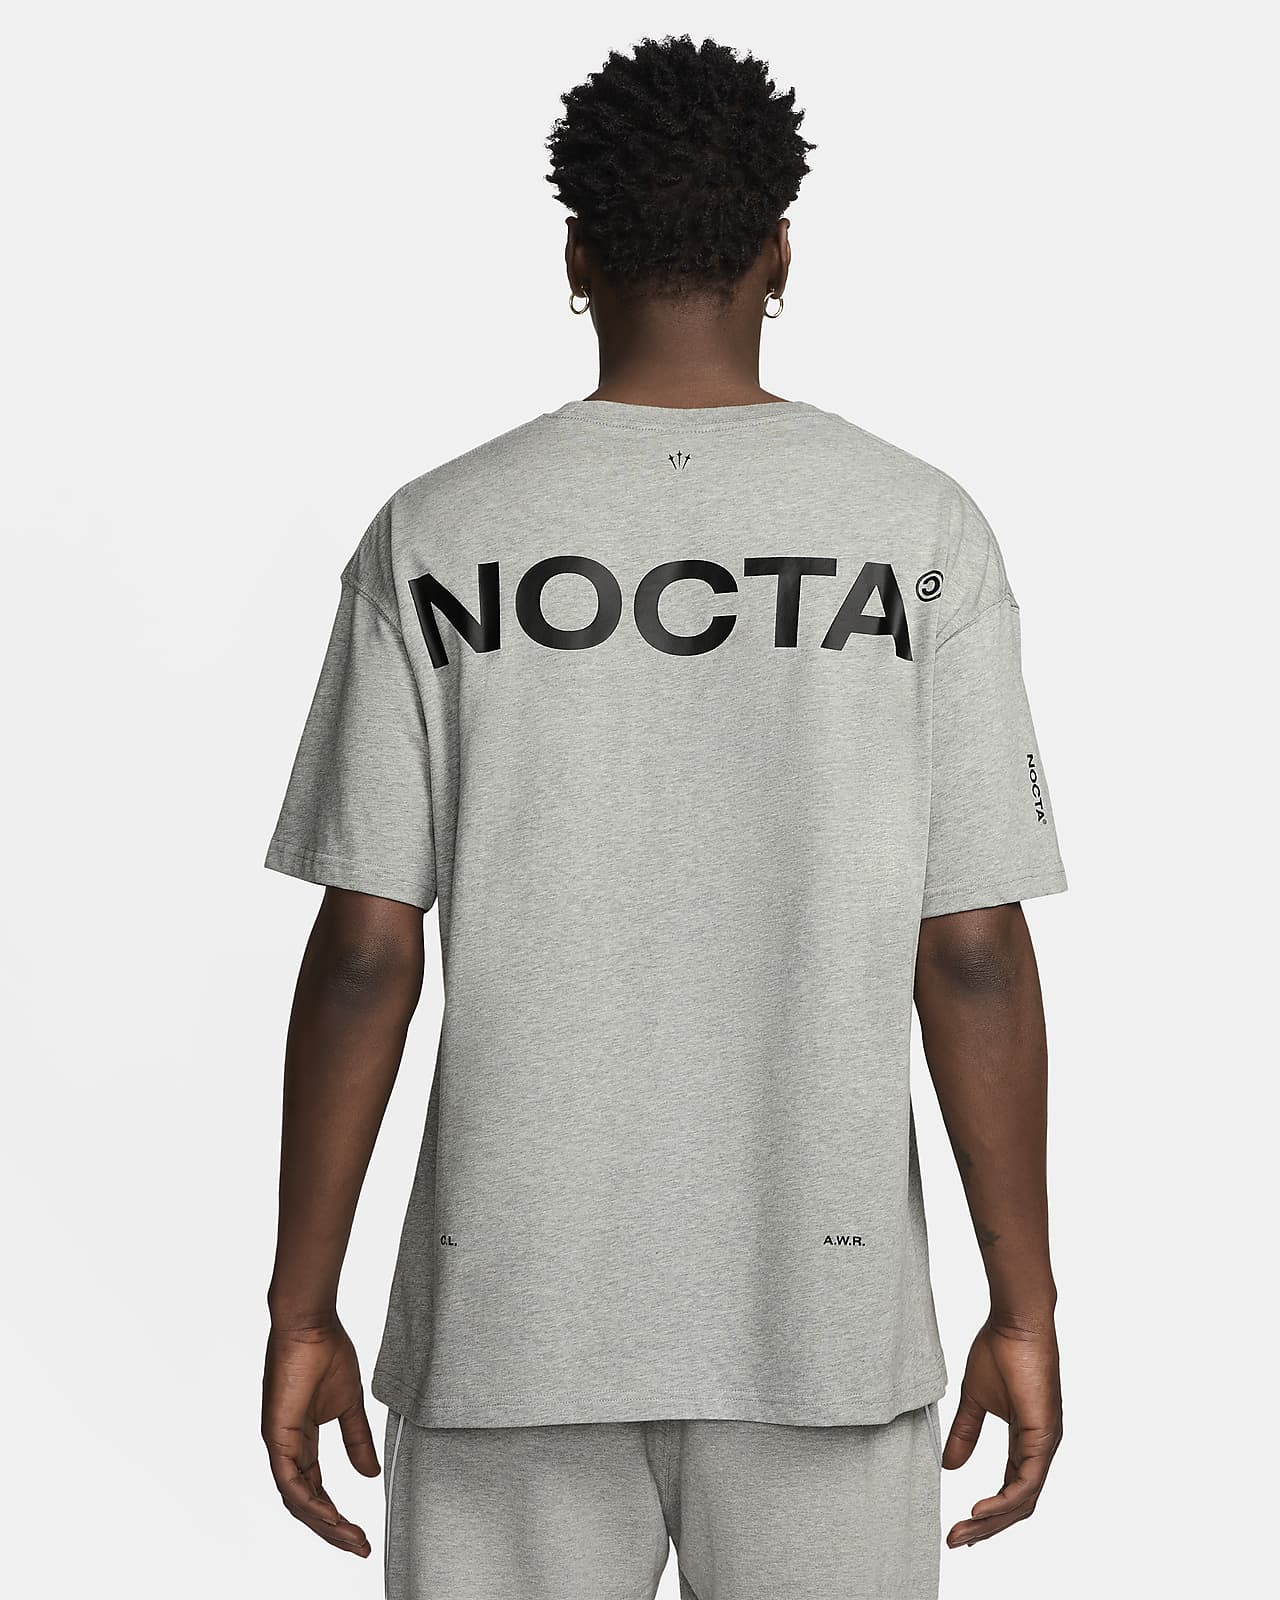 NOCTA Graphic Tee. Nike.com